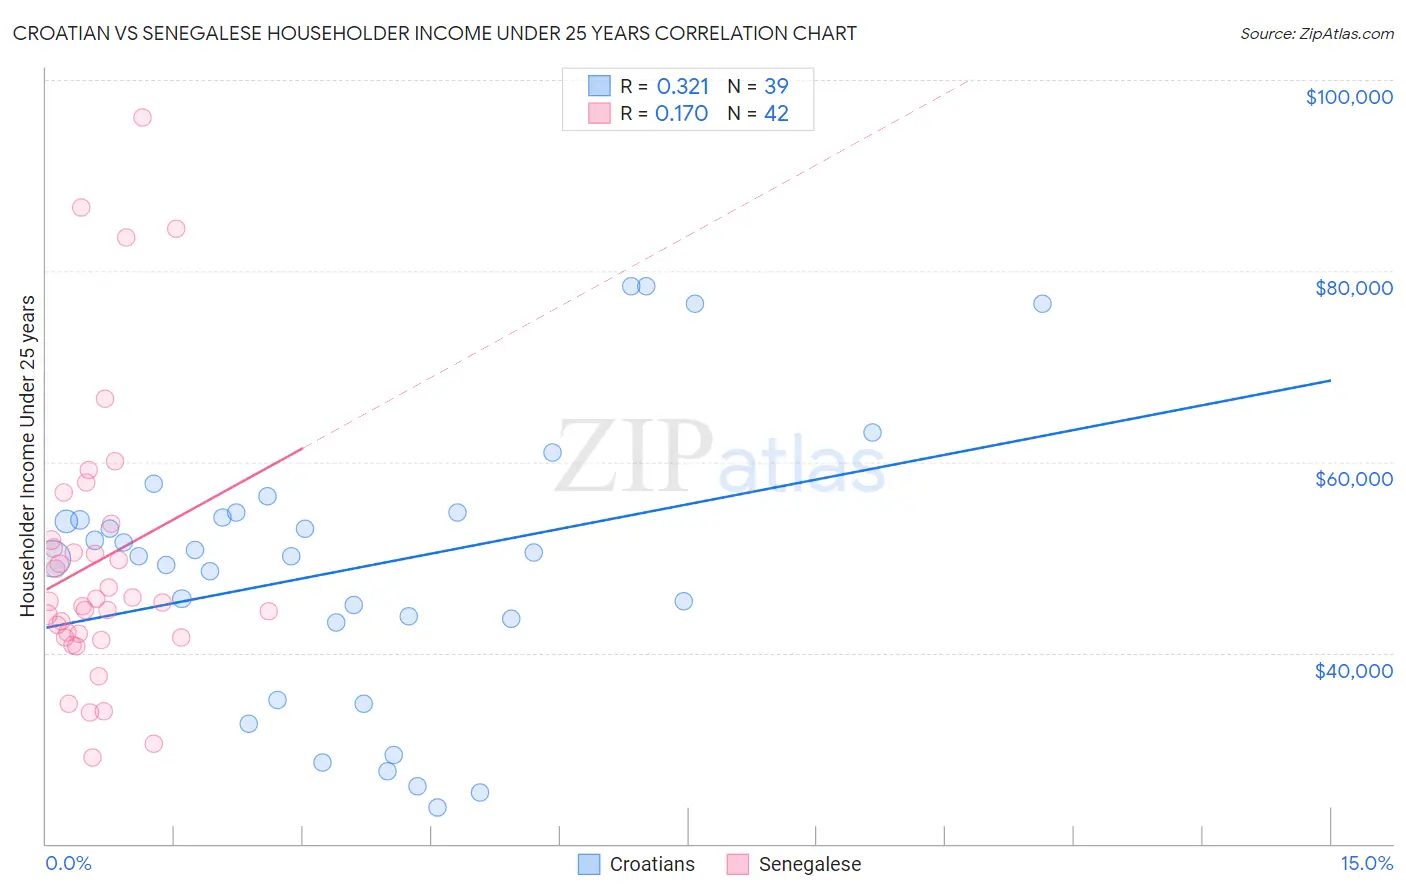 Croatian vs Senegalese Householder Income Under 25 years